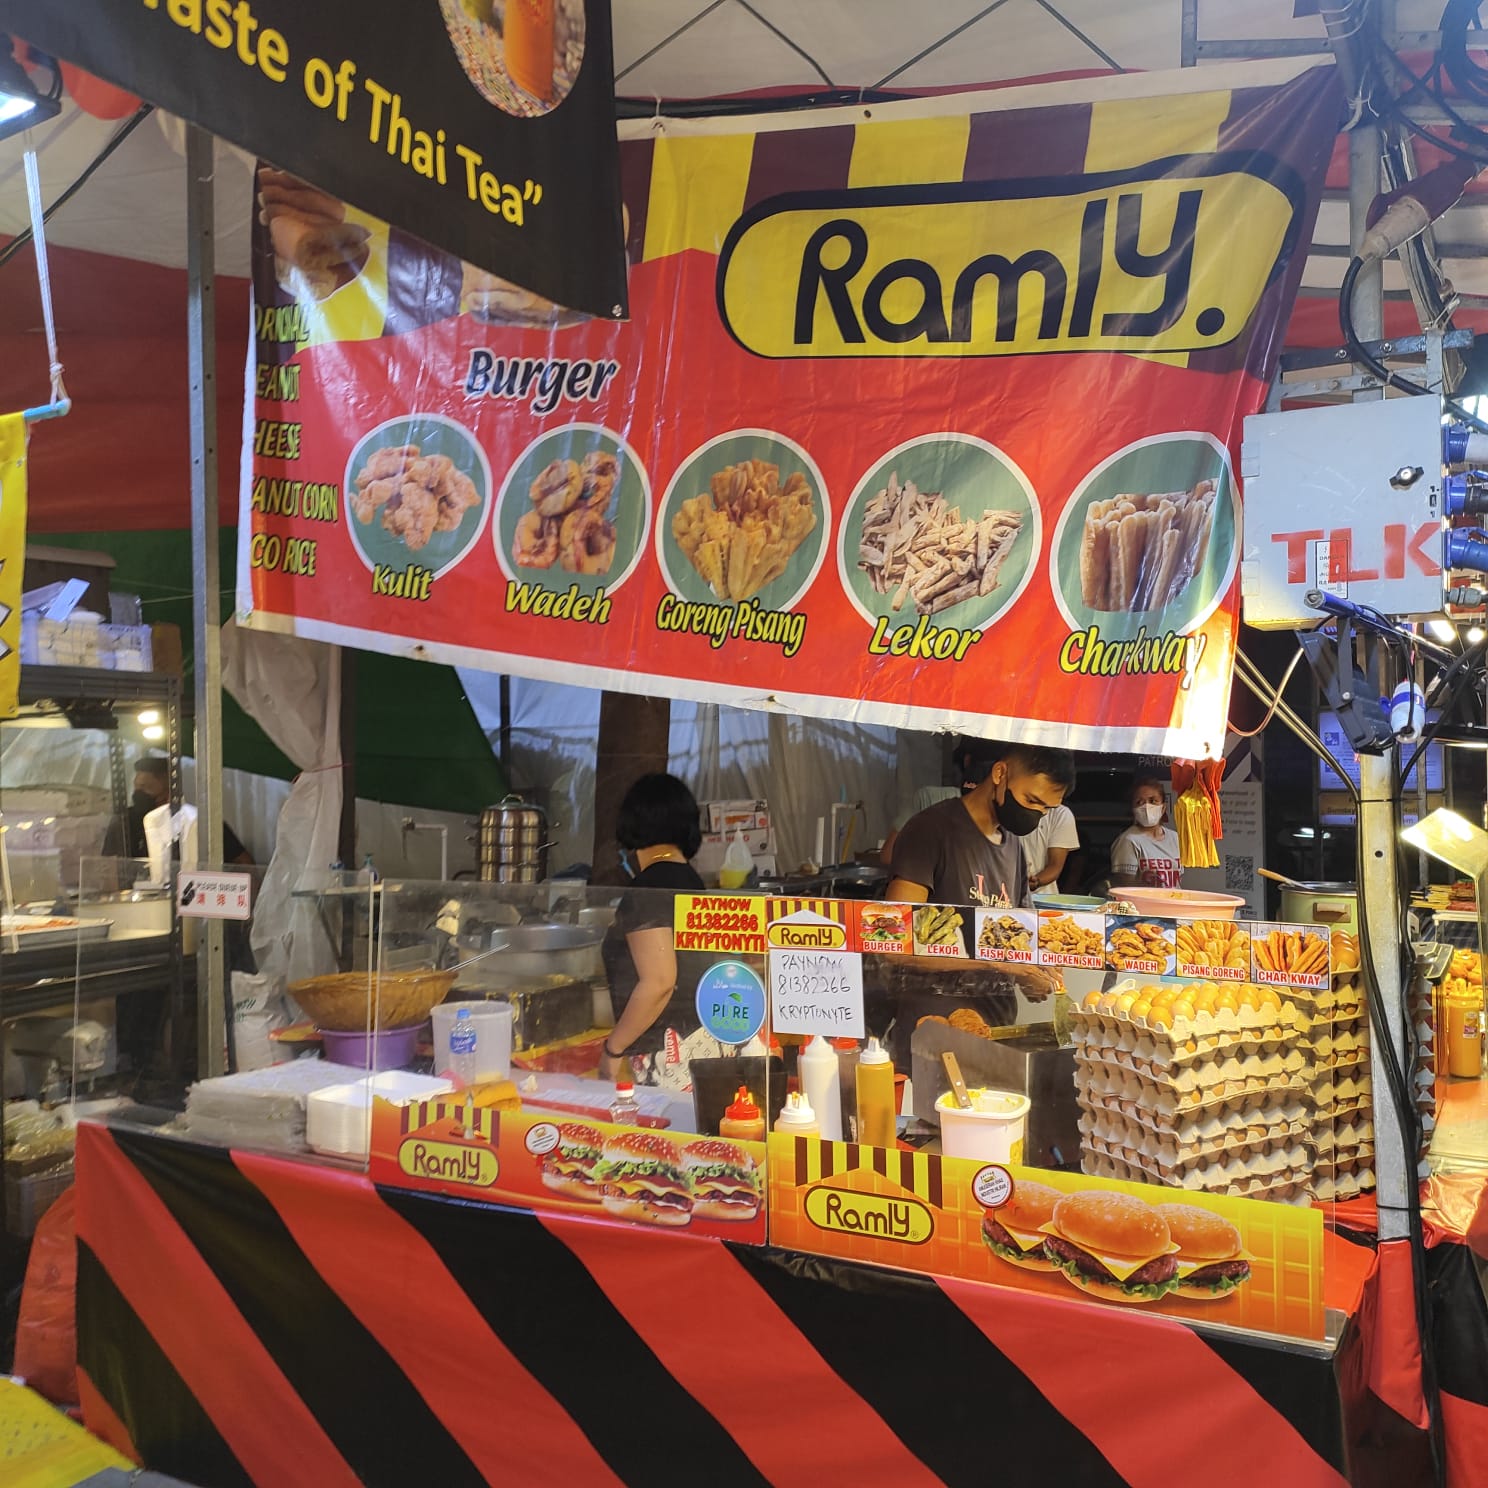 Pasar Malams in Singapore Ramly Burger